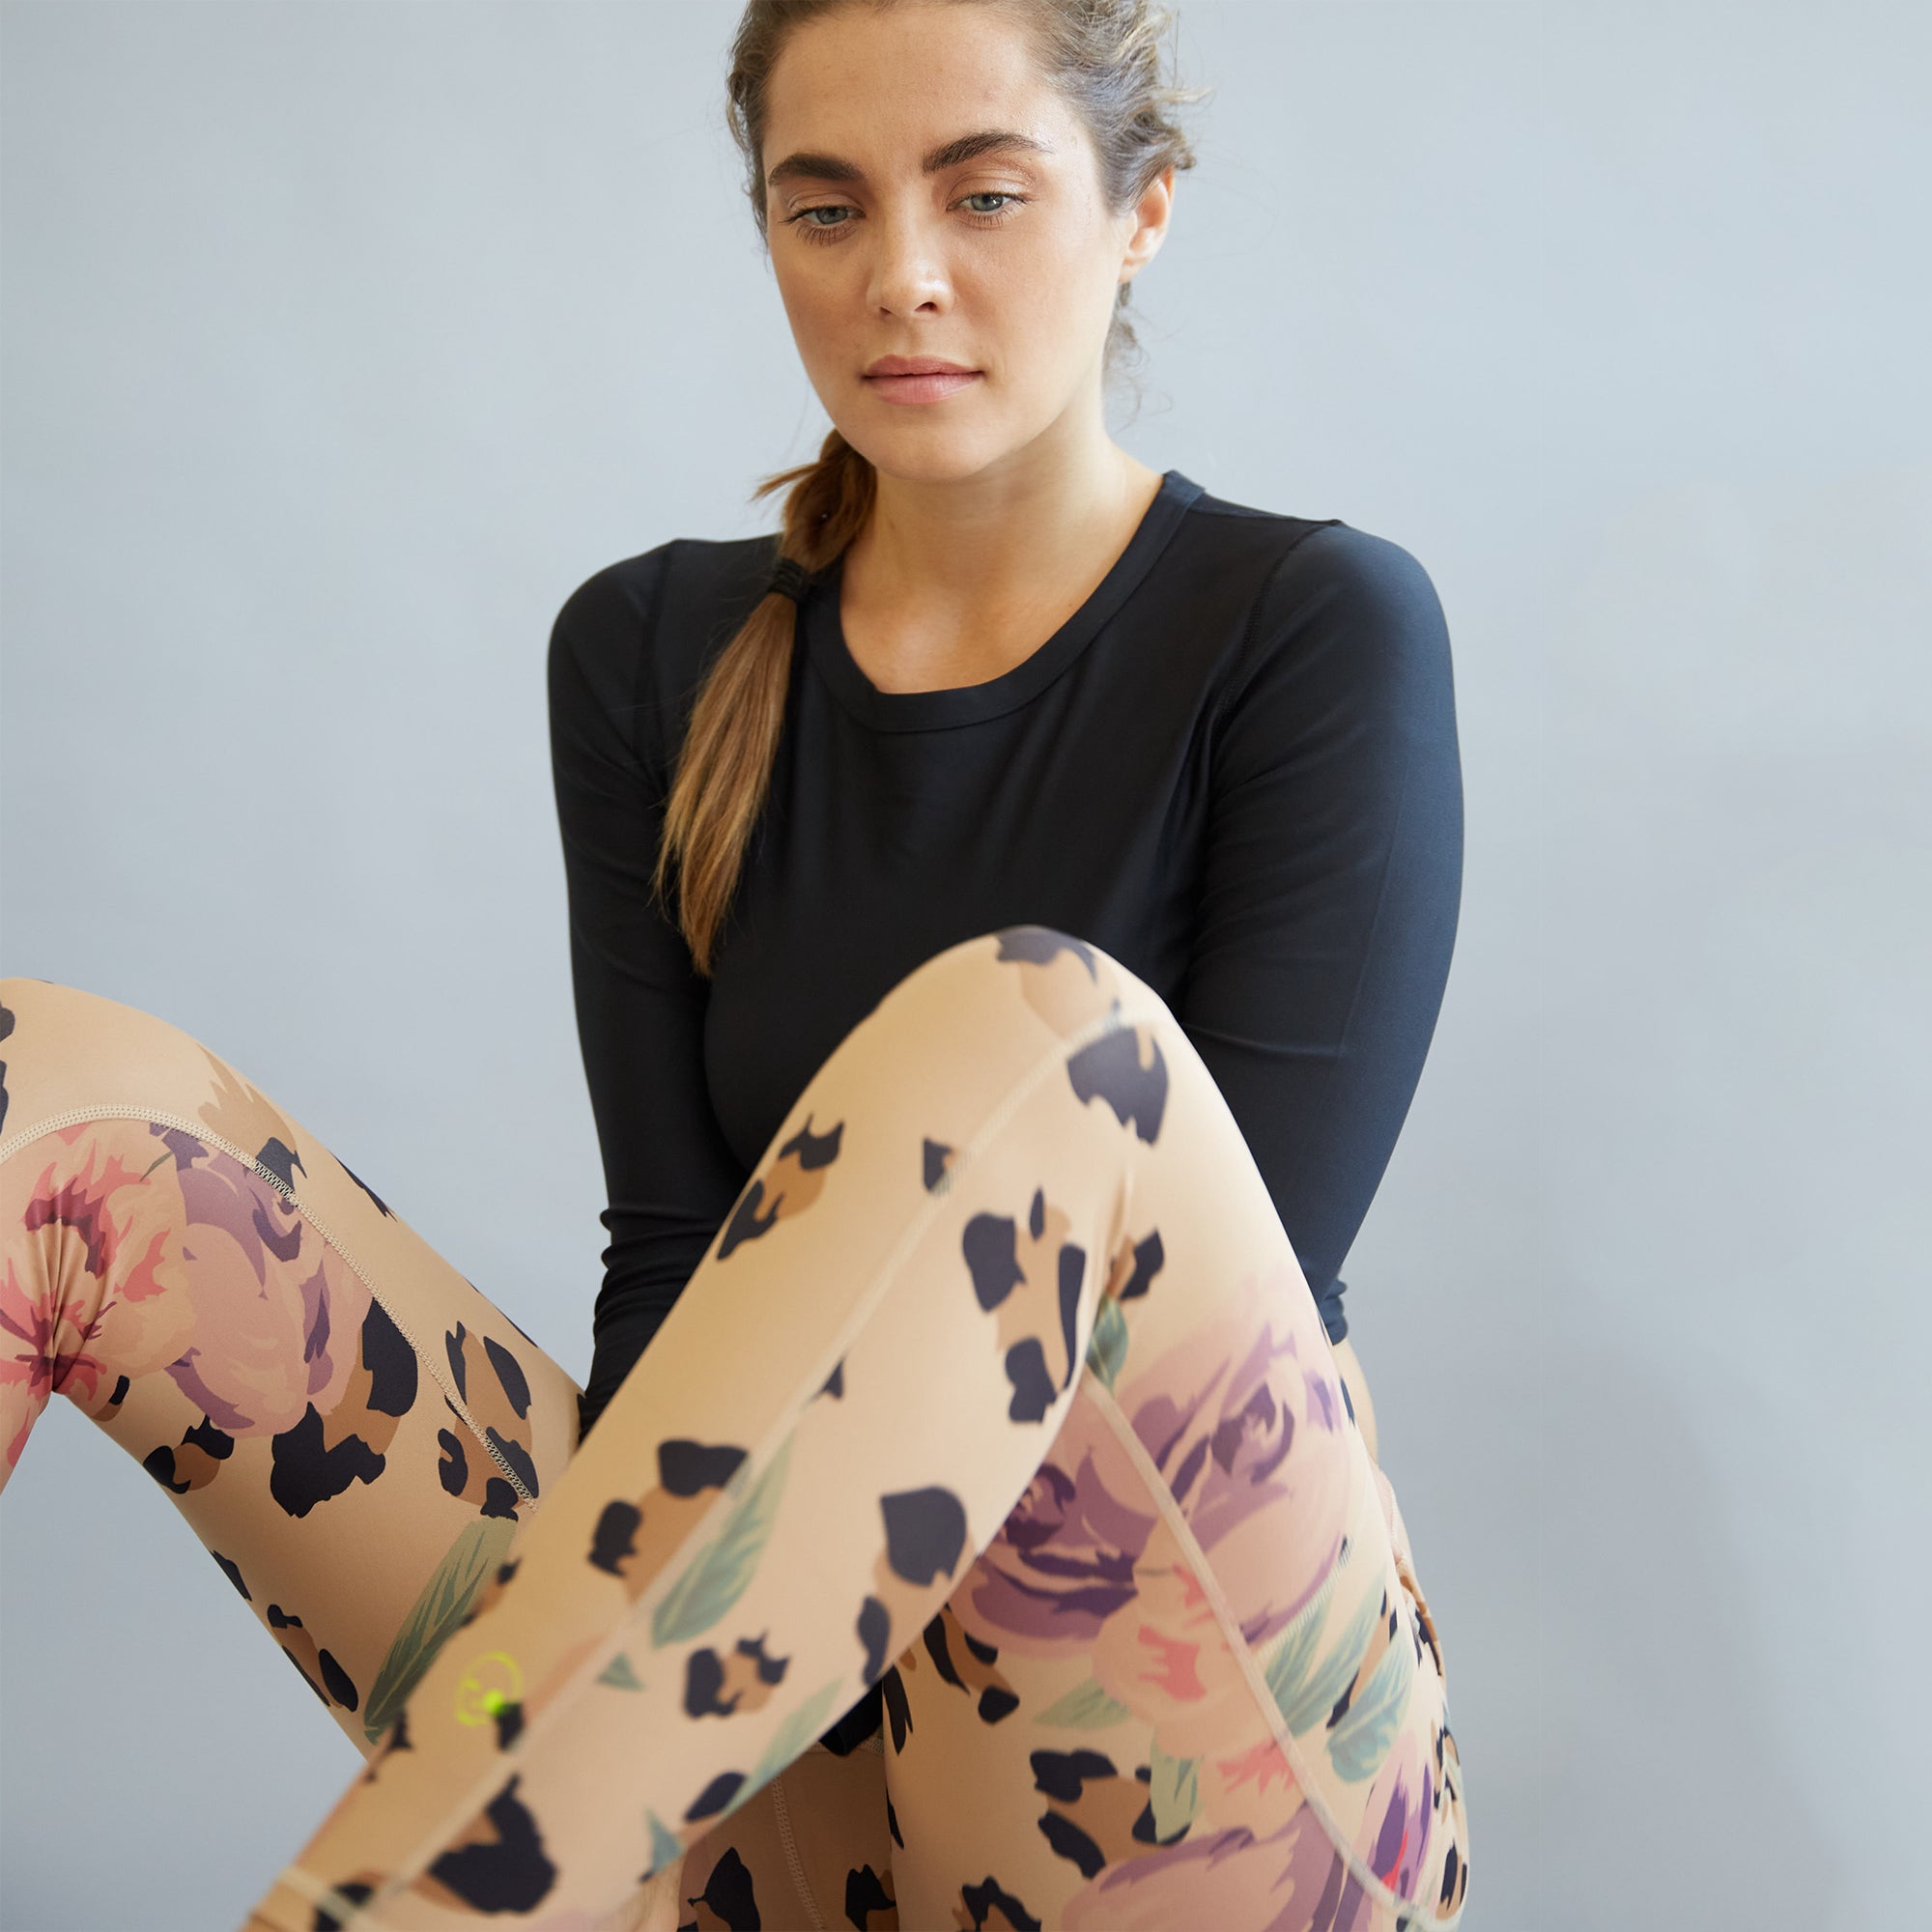 Nala Leopard Wide Waistband Pocketed Leggings – WSI Sportswear